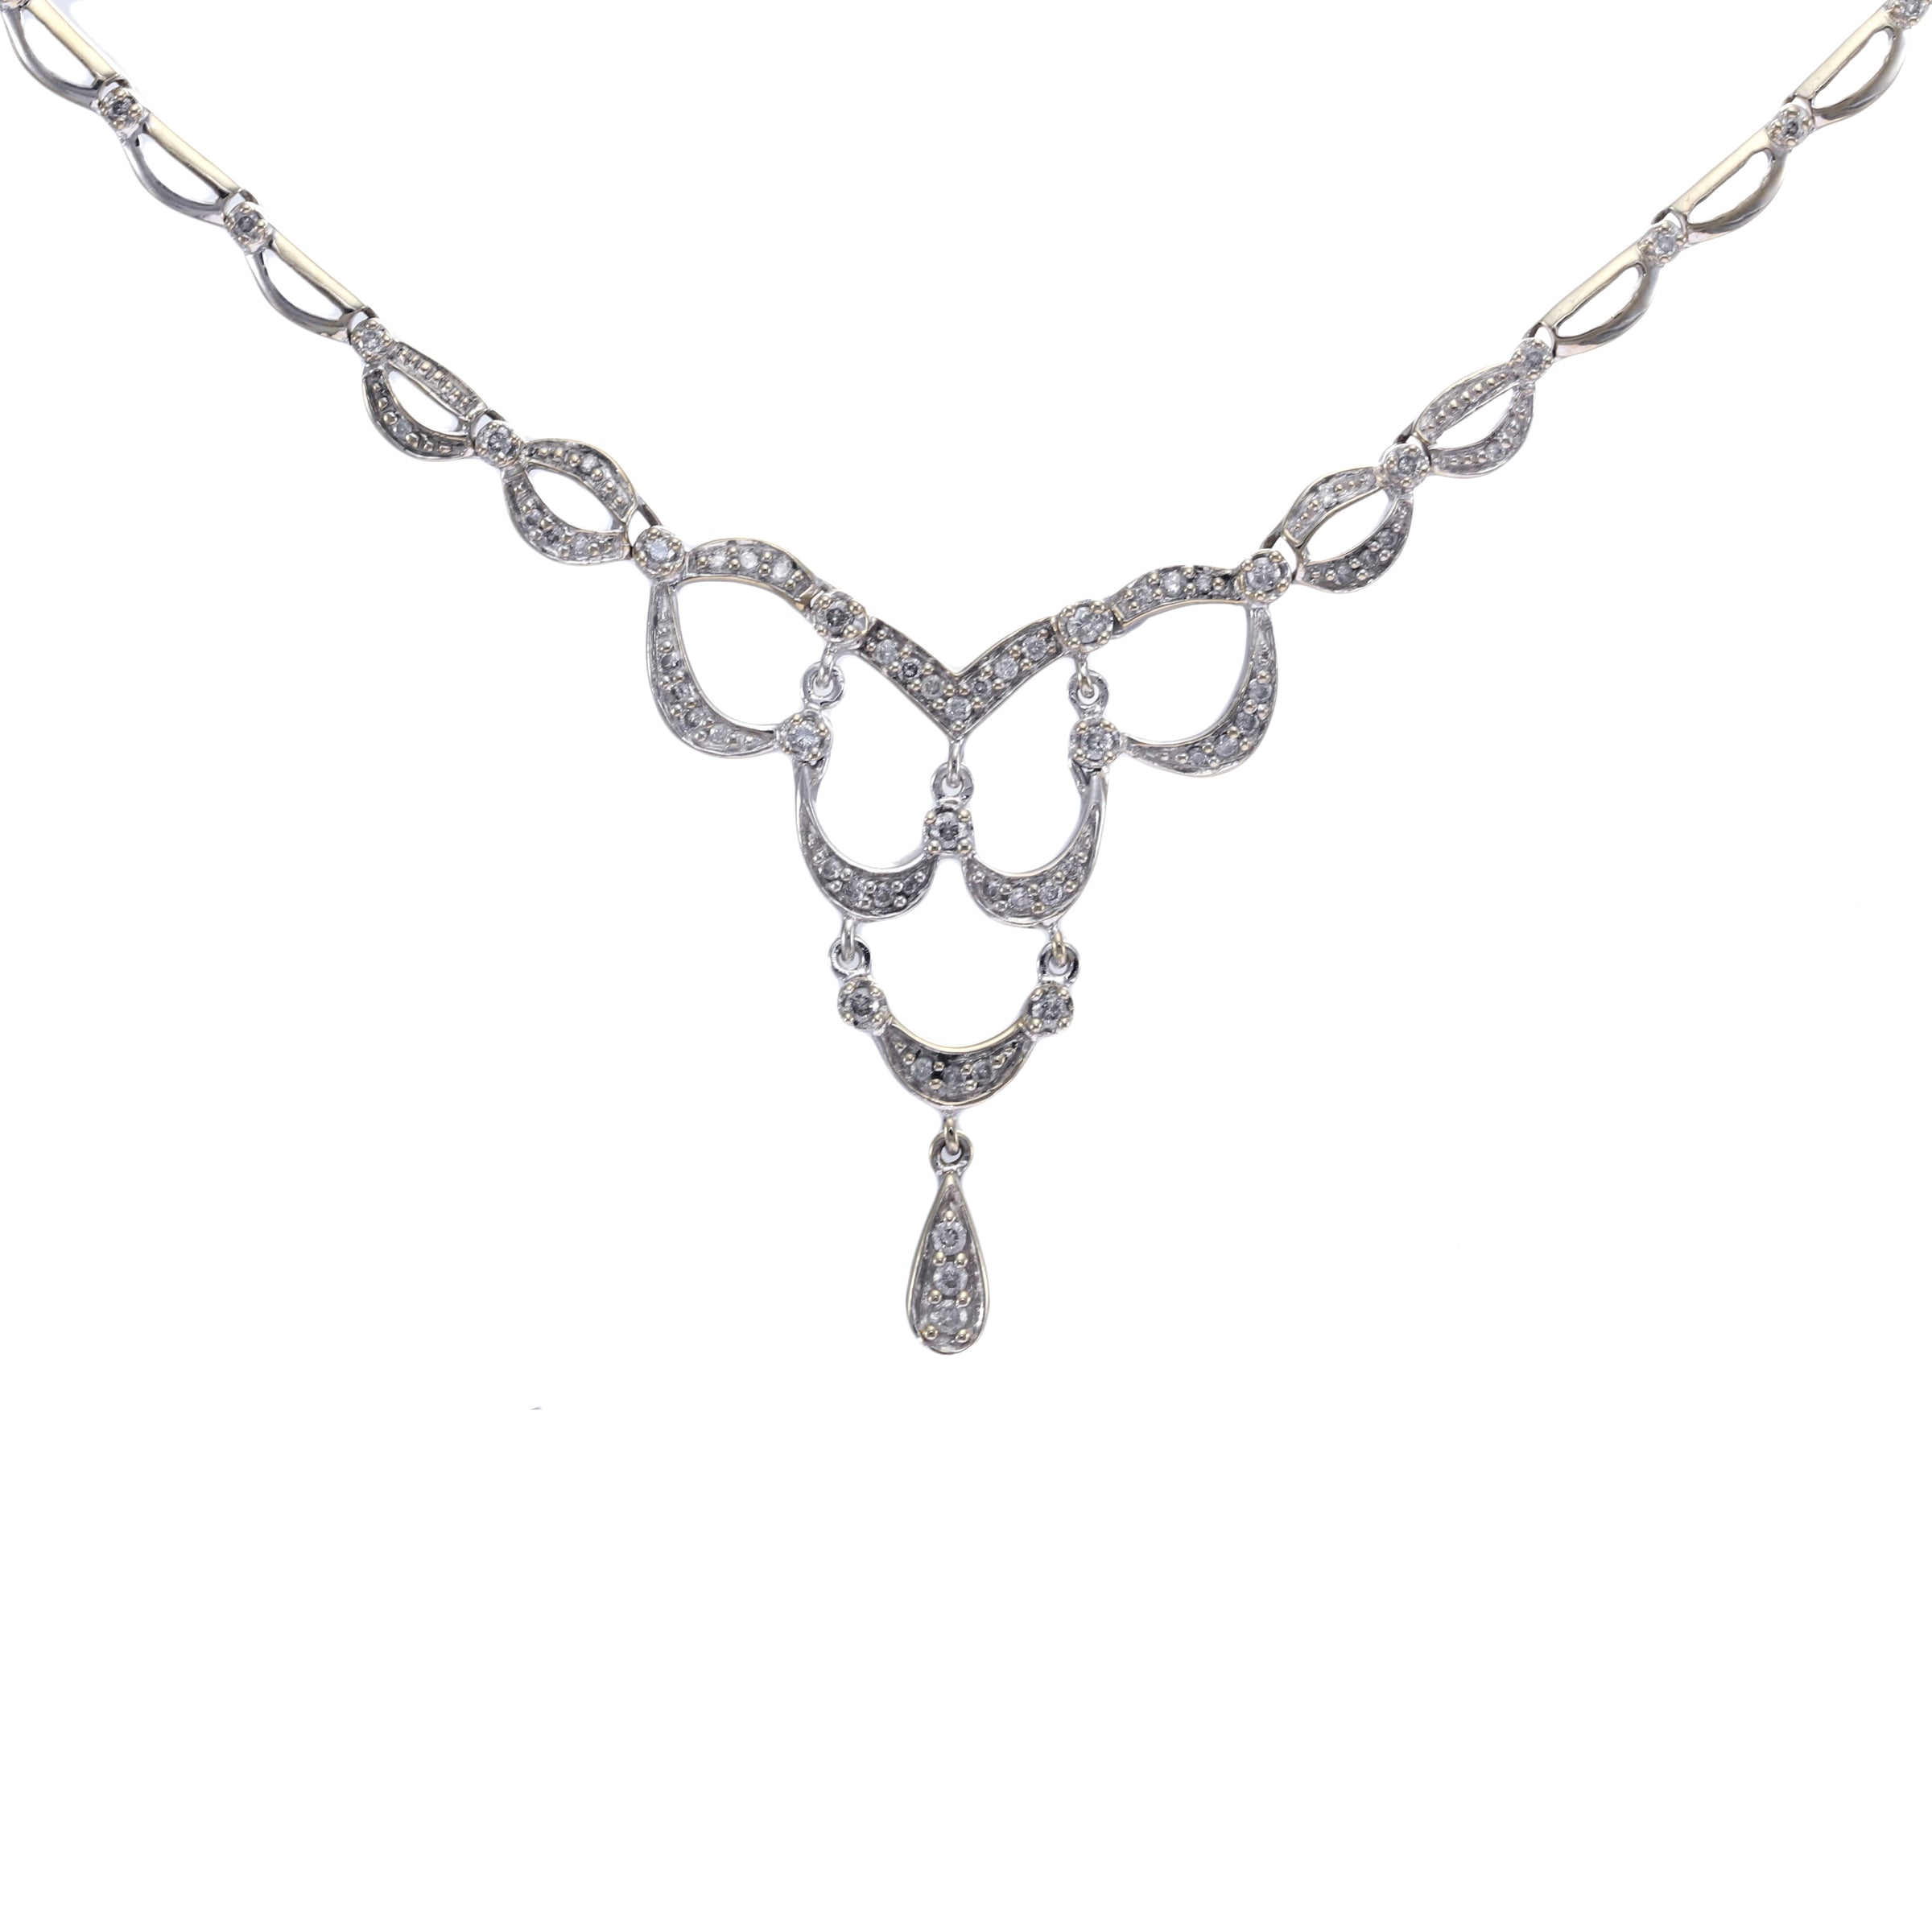 Vintage Art Deco necklace - Jewelry